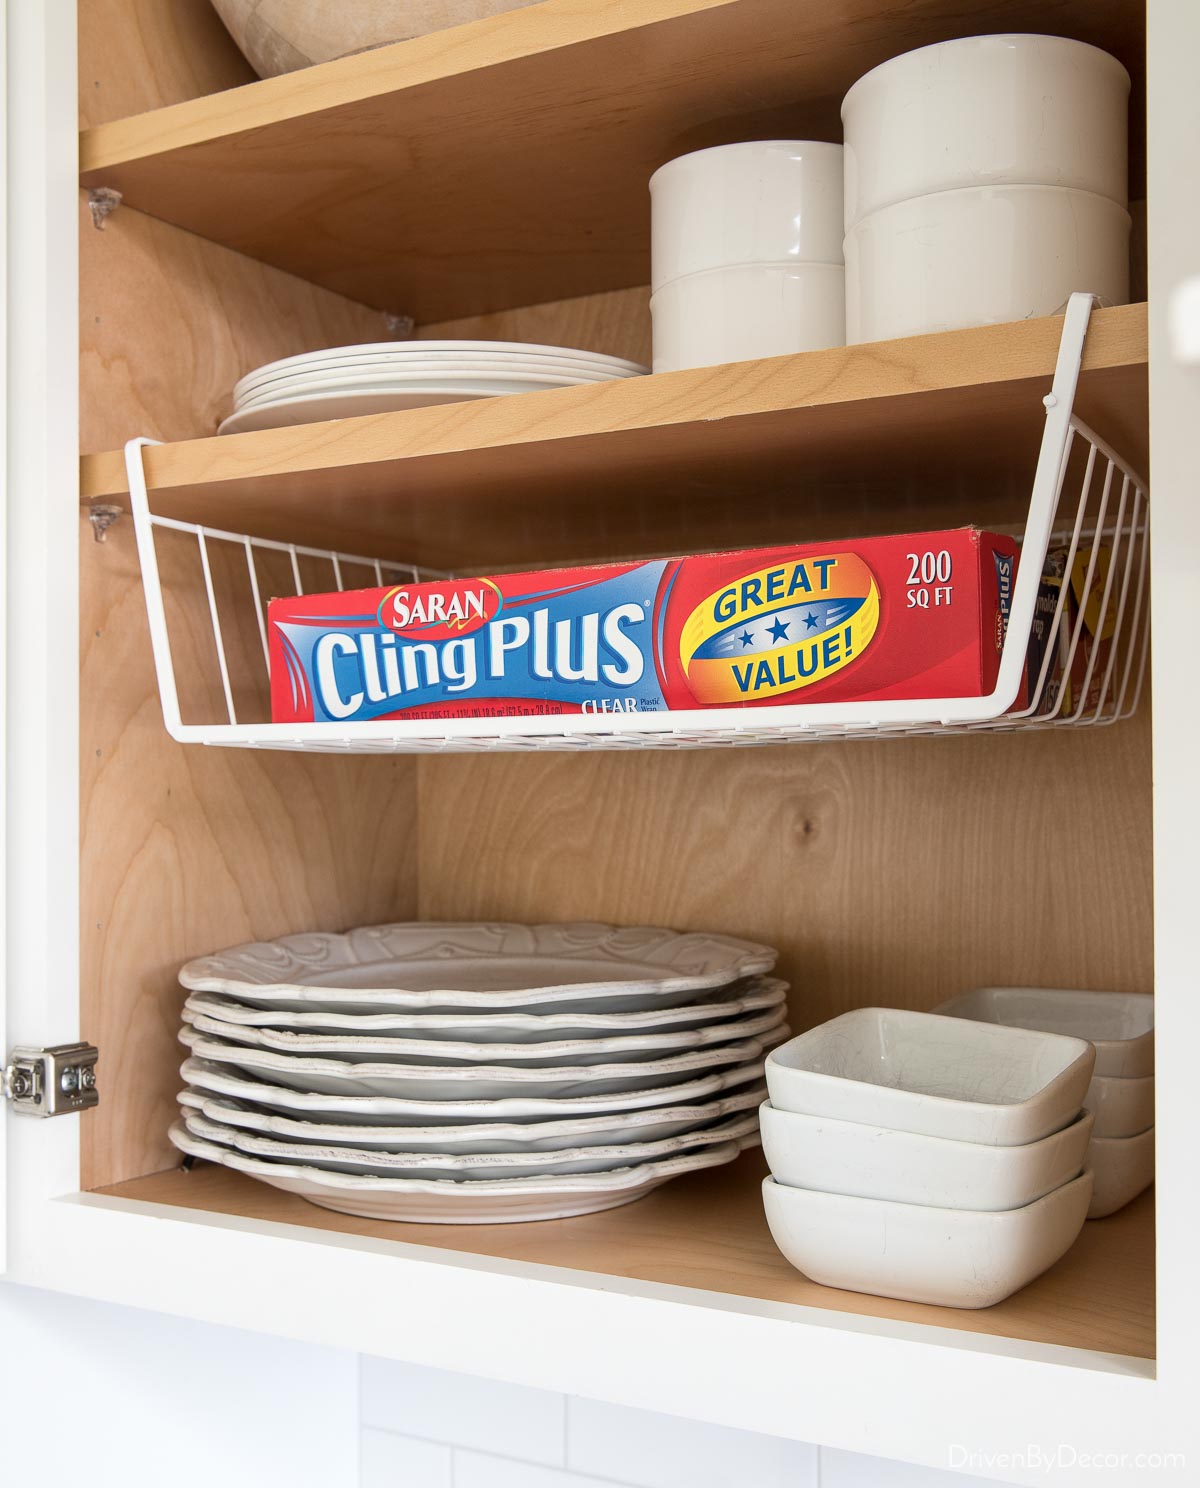 Under shelf basket for extra storage in your kitchen cabinets